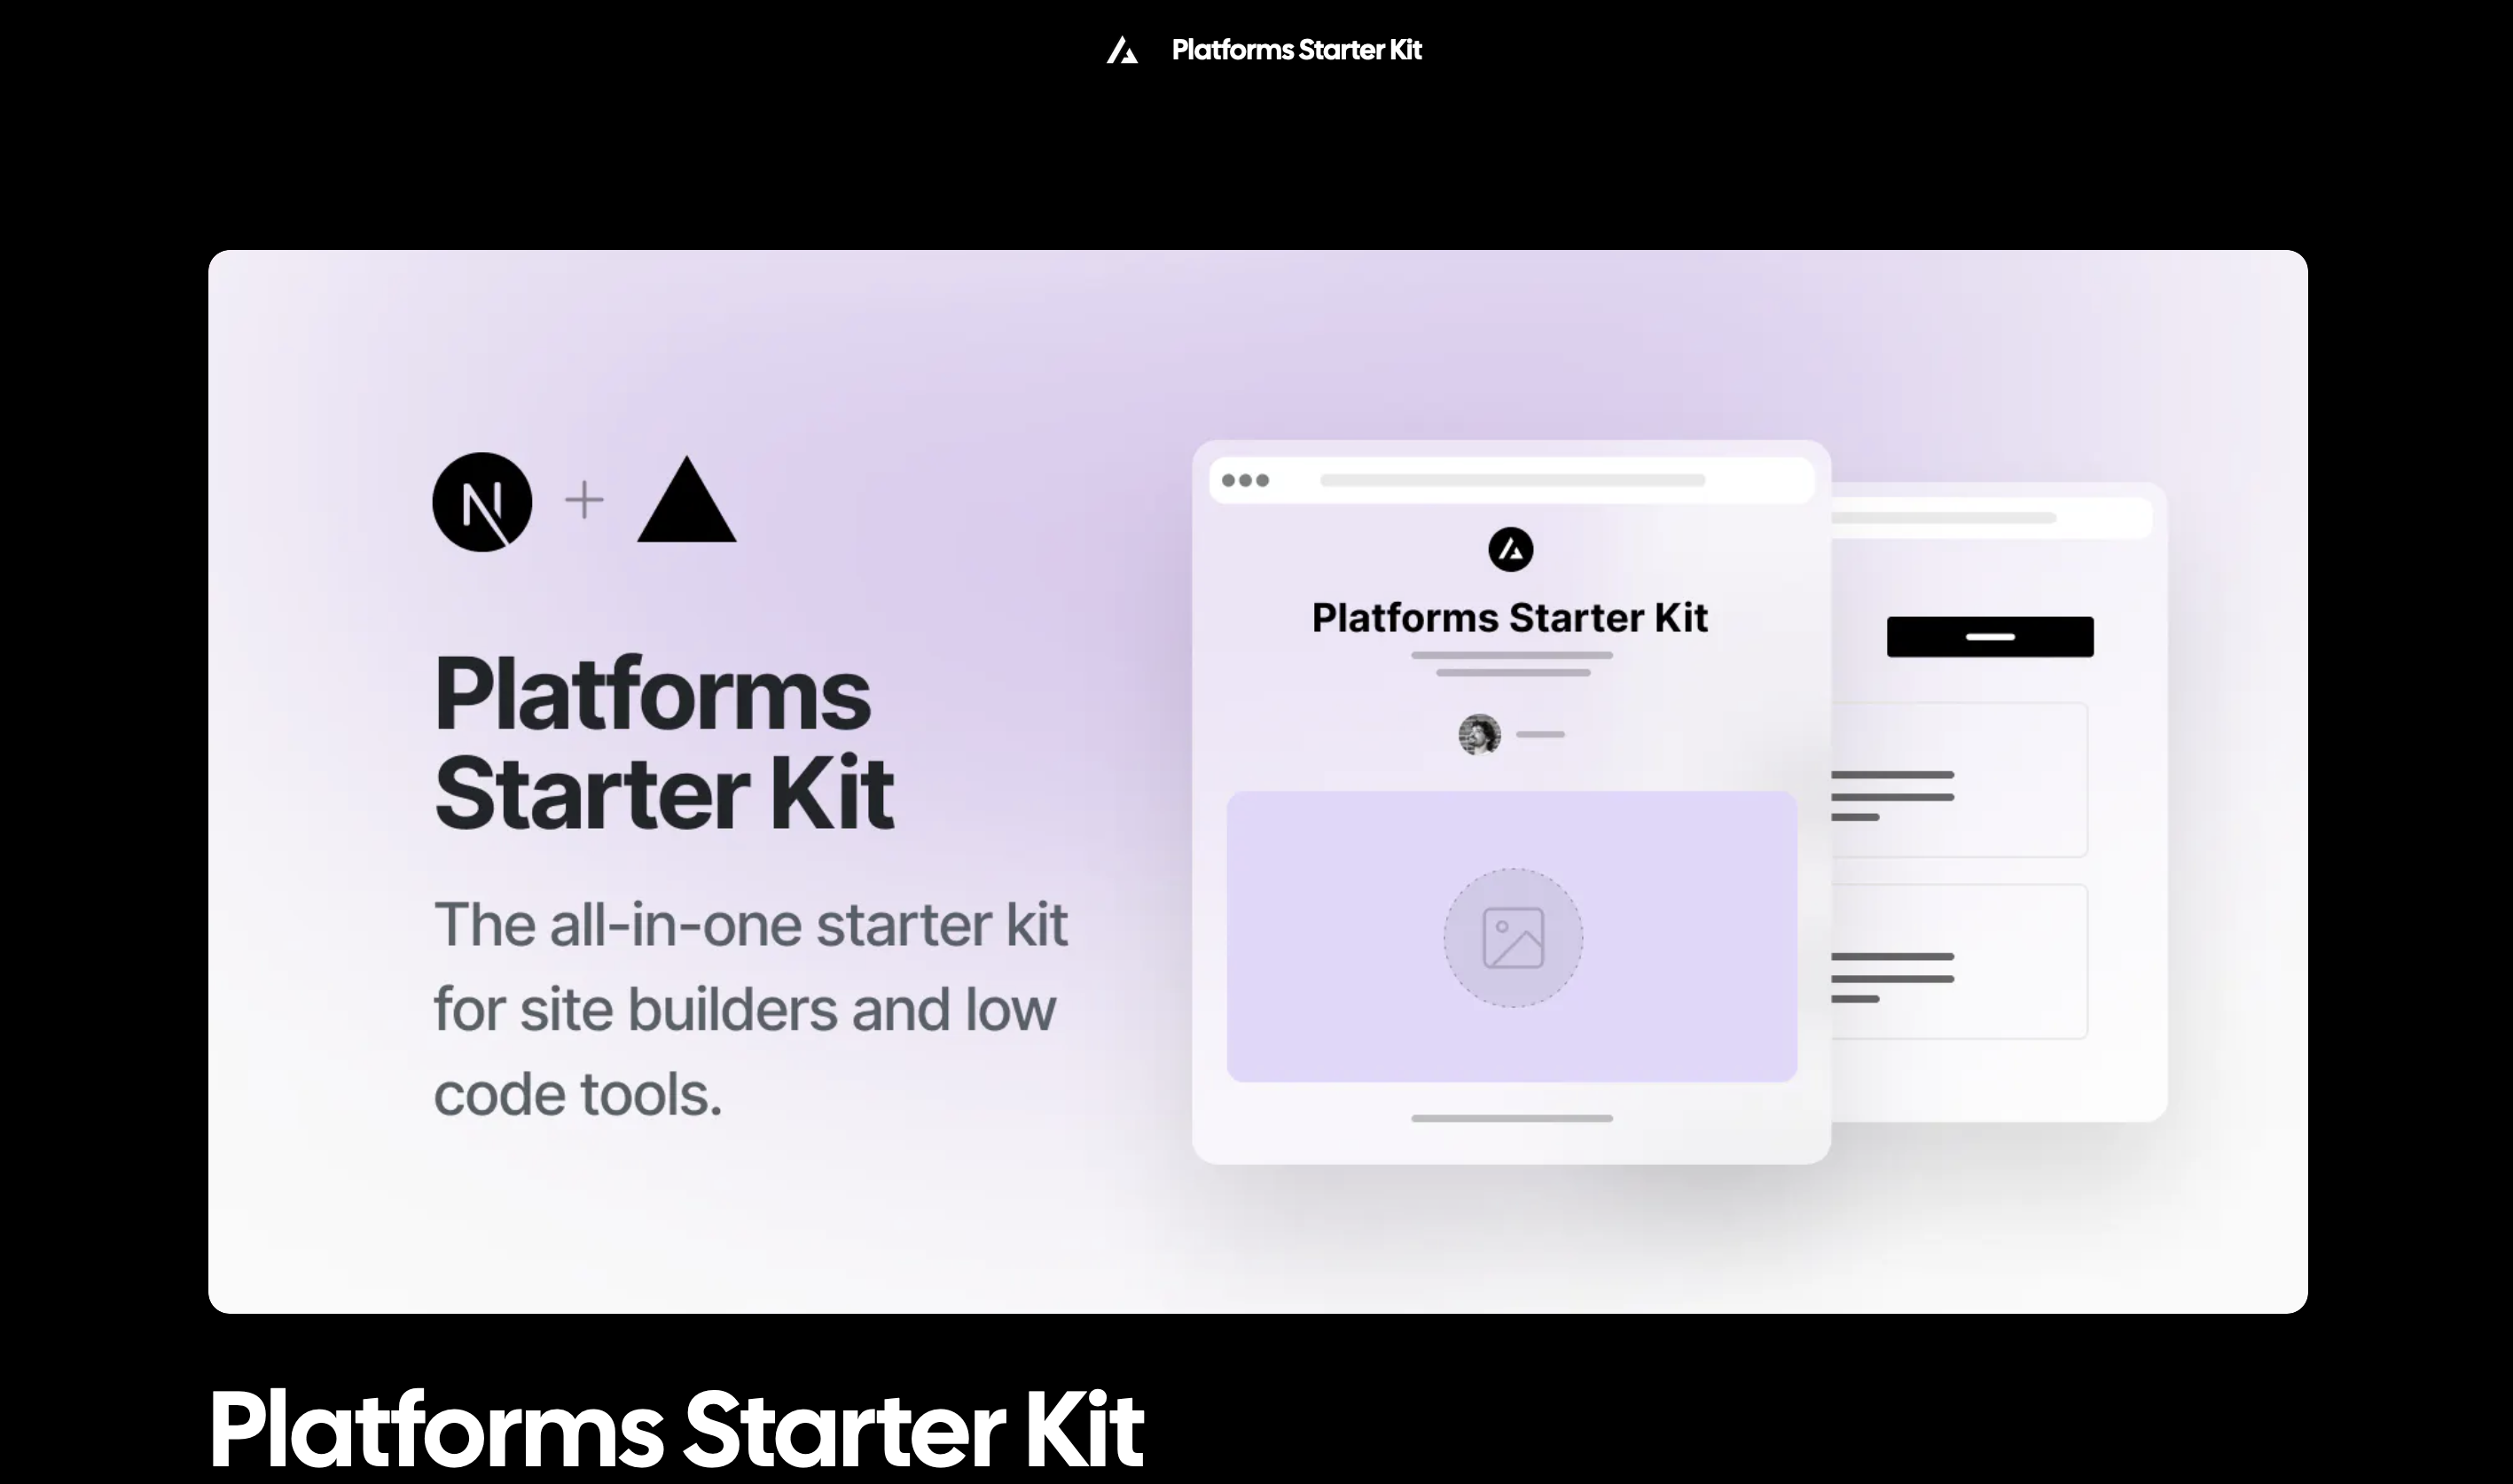 Platform Starter Kit